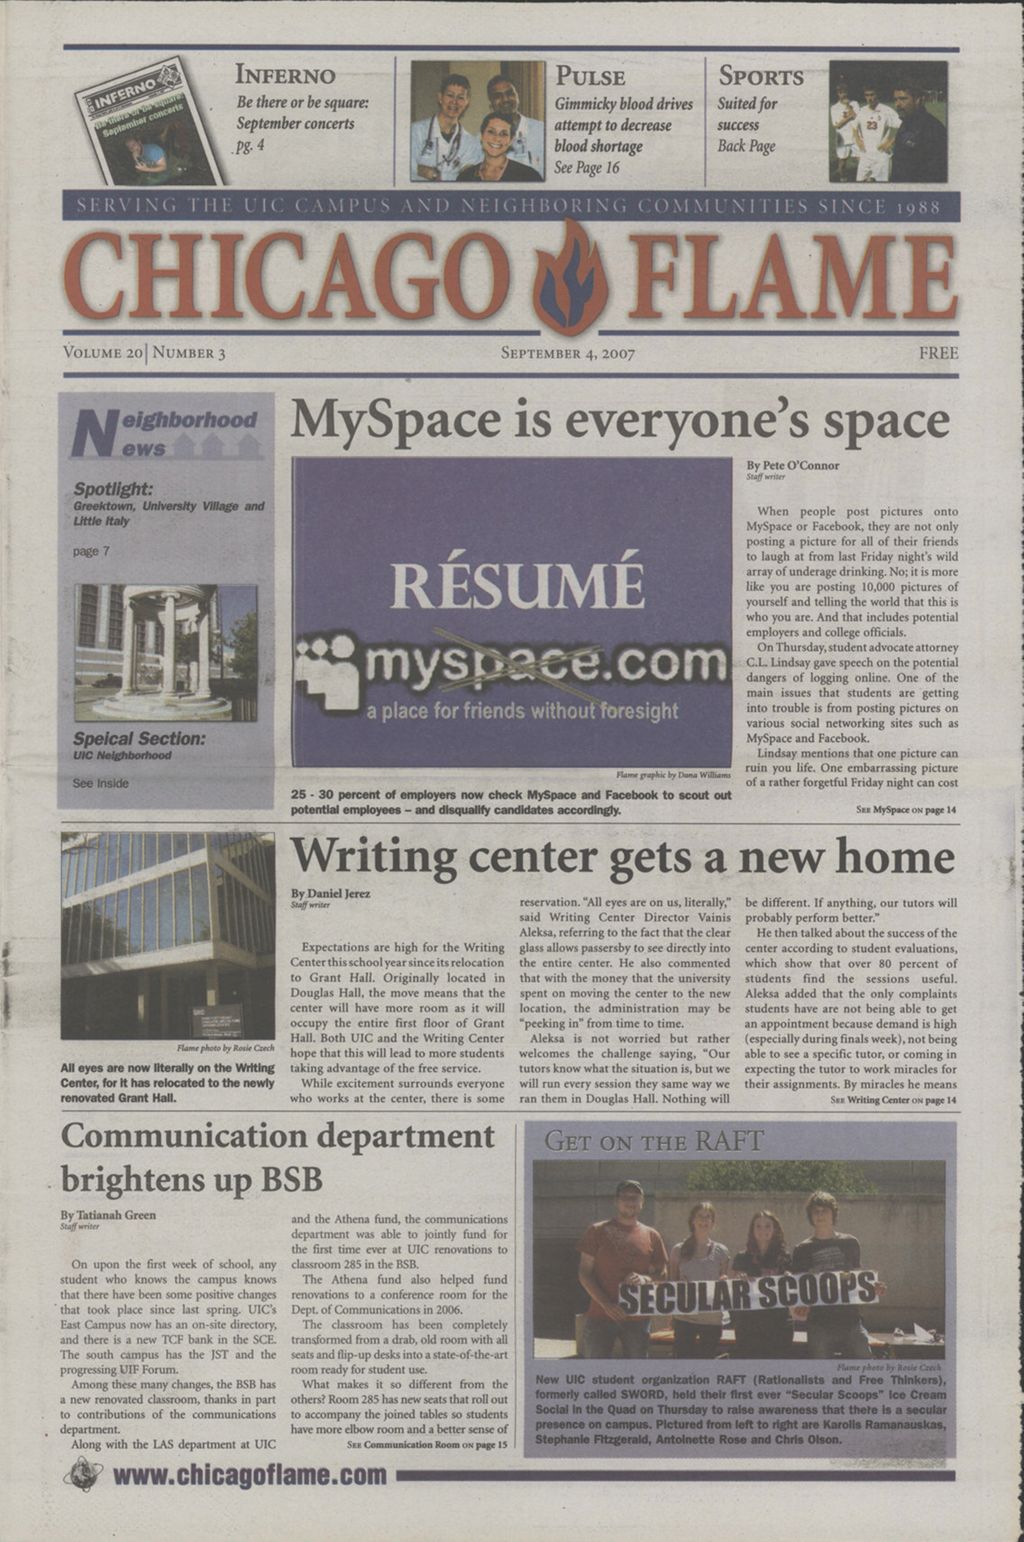 Chicago Flame (September 4, 2007)